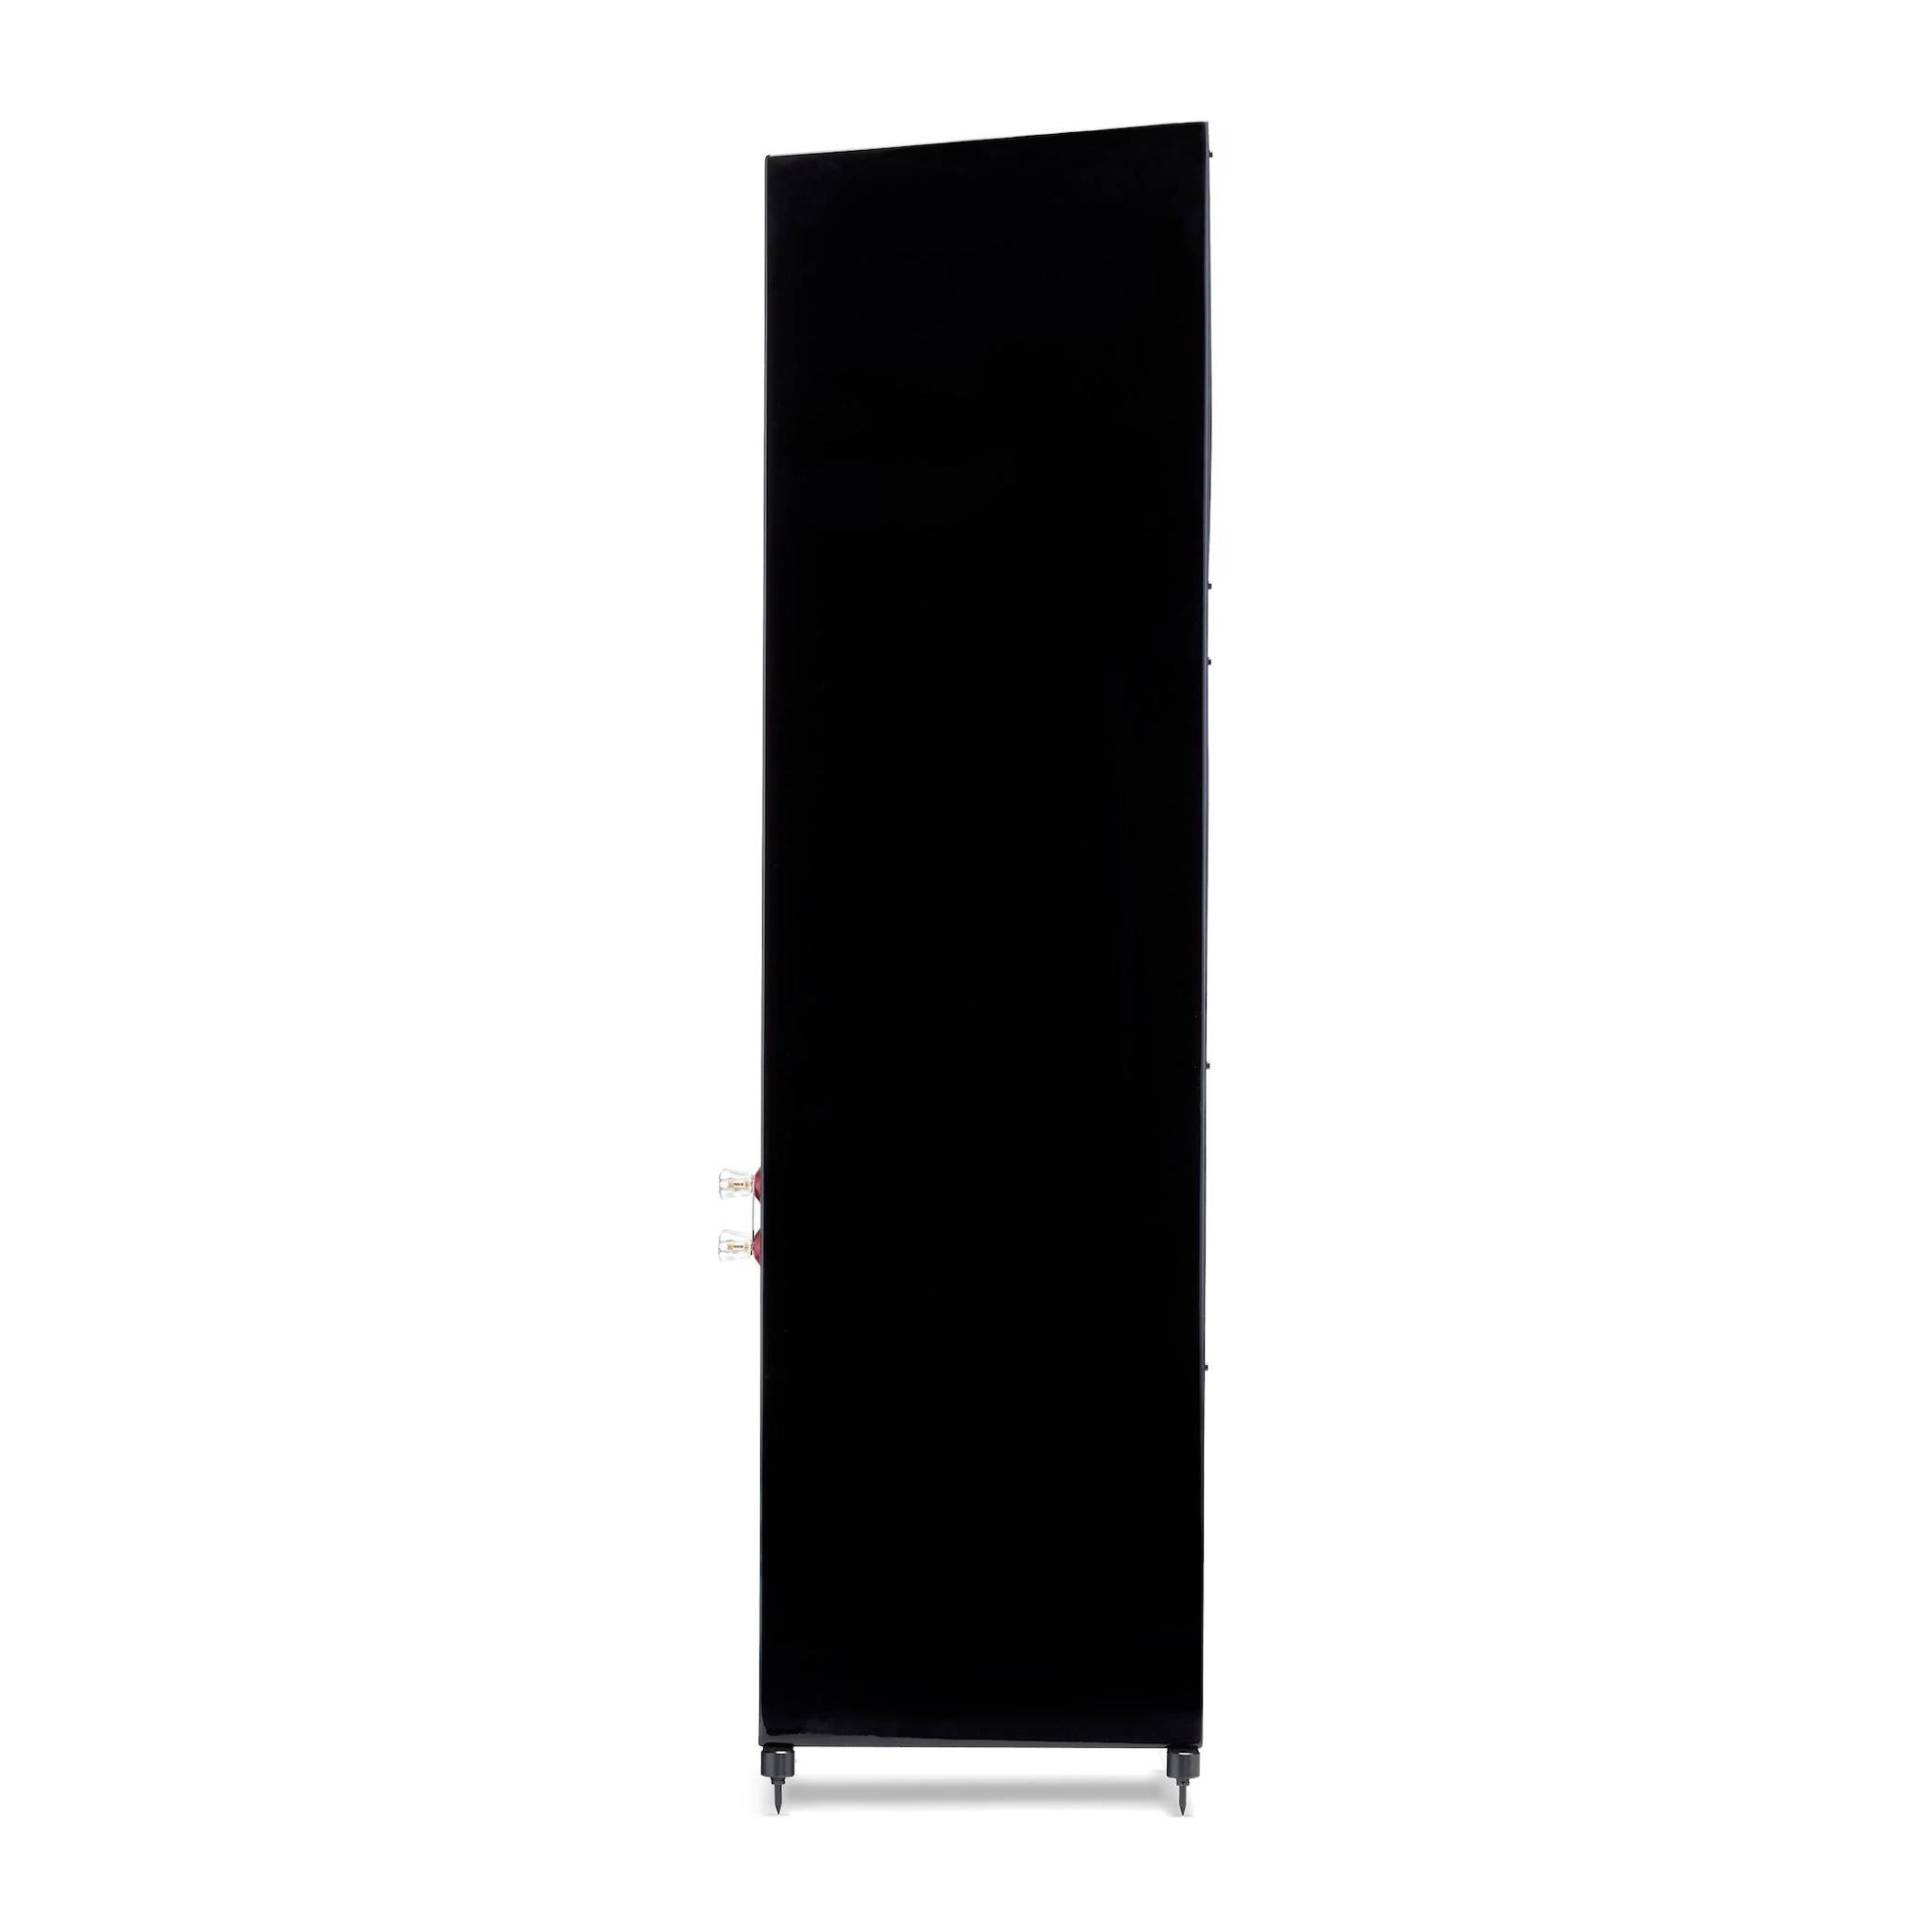 Martin Logan Motion 60XTi - Floor Standing Speaker - Pair - AVStore